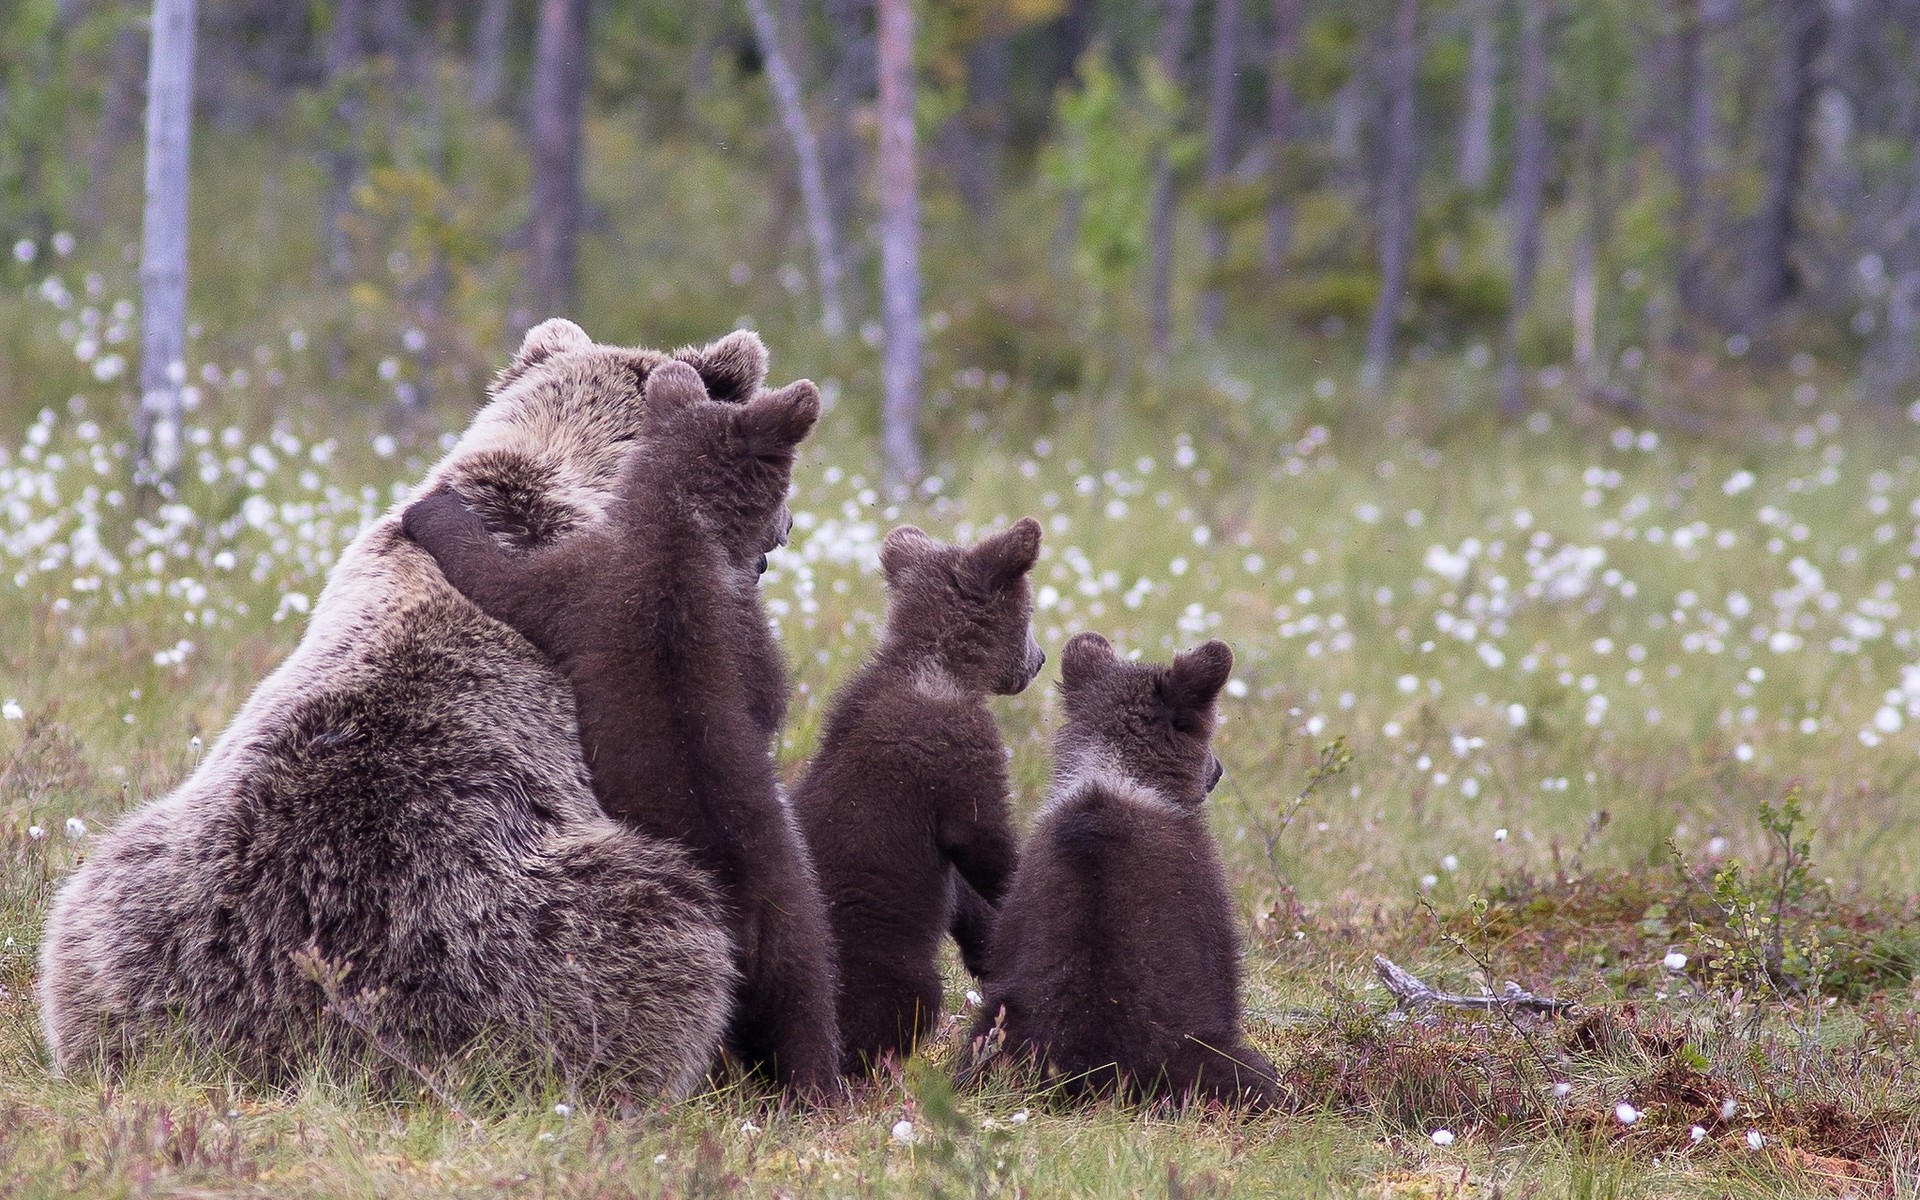 animals mammal wildlife outdoors grass nature daylight fur wild brown bear family